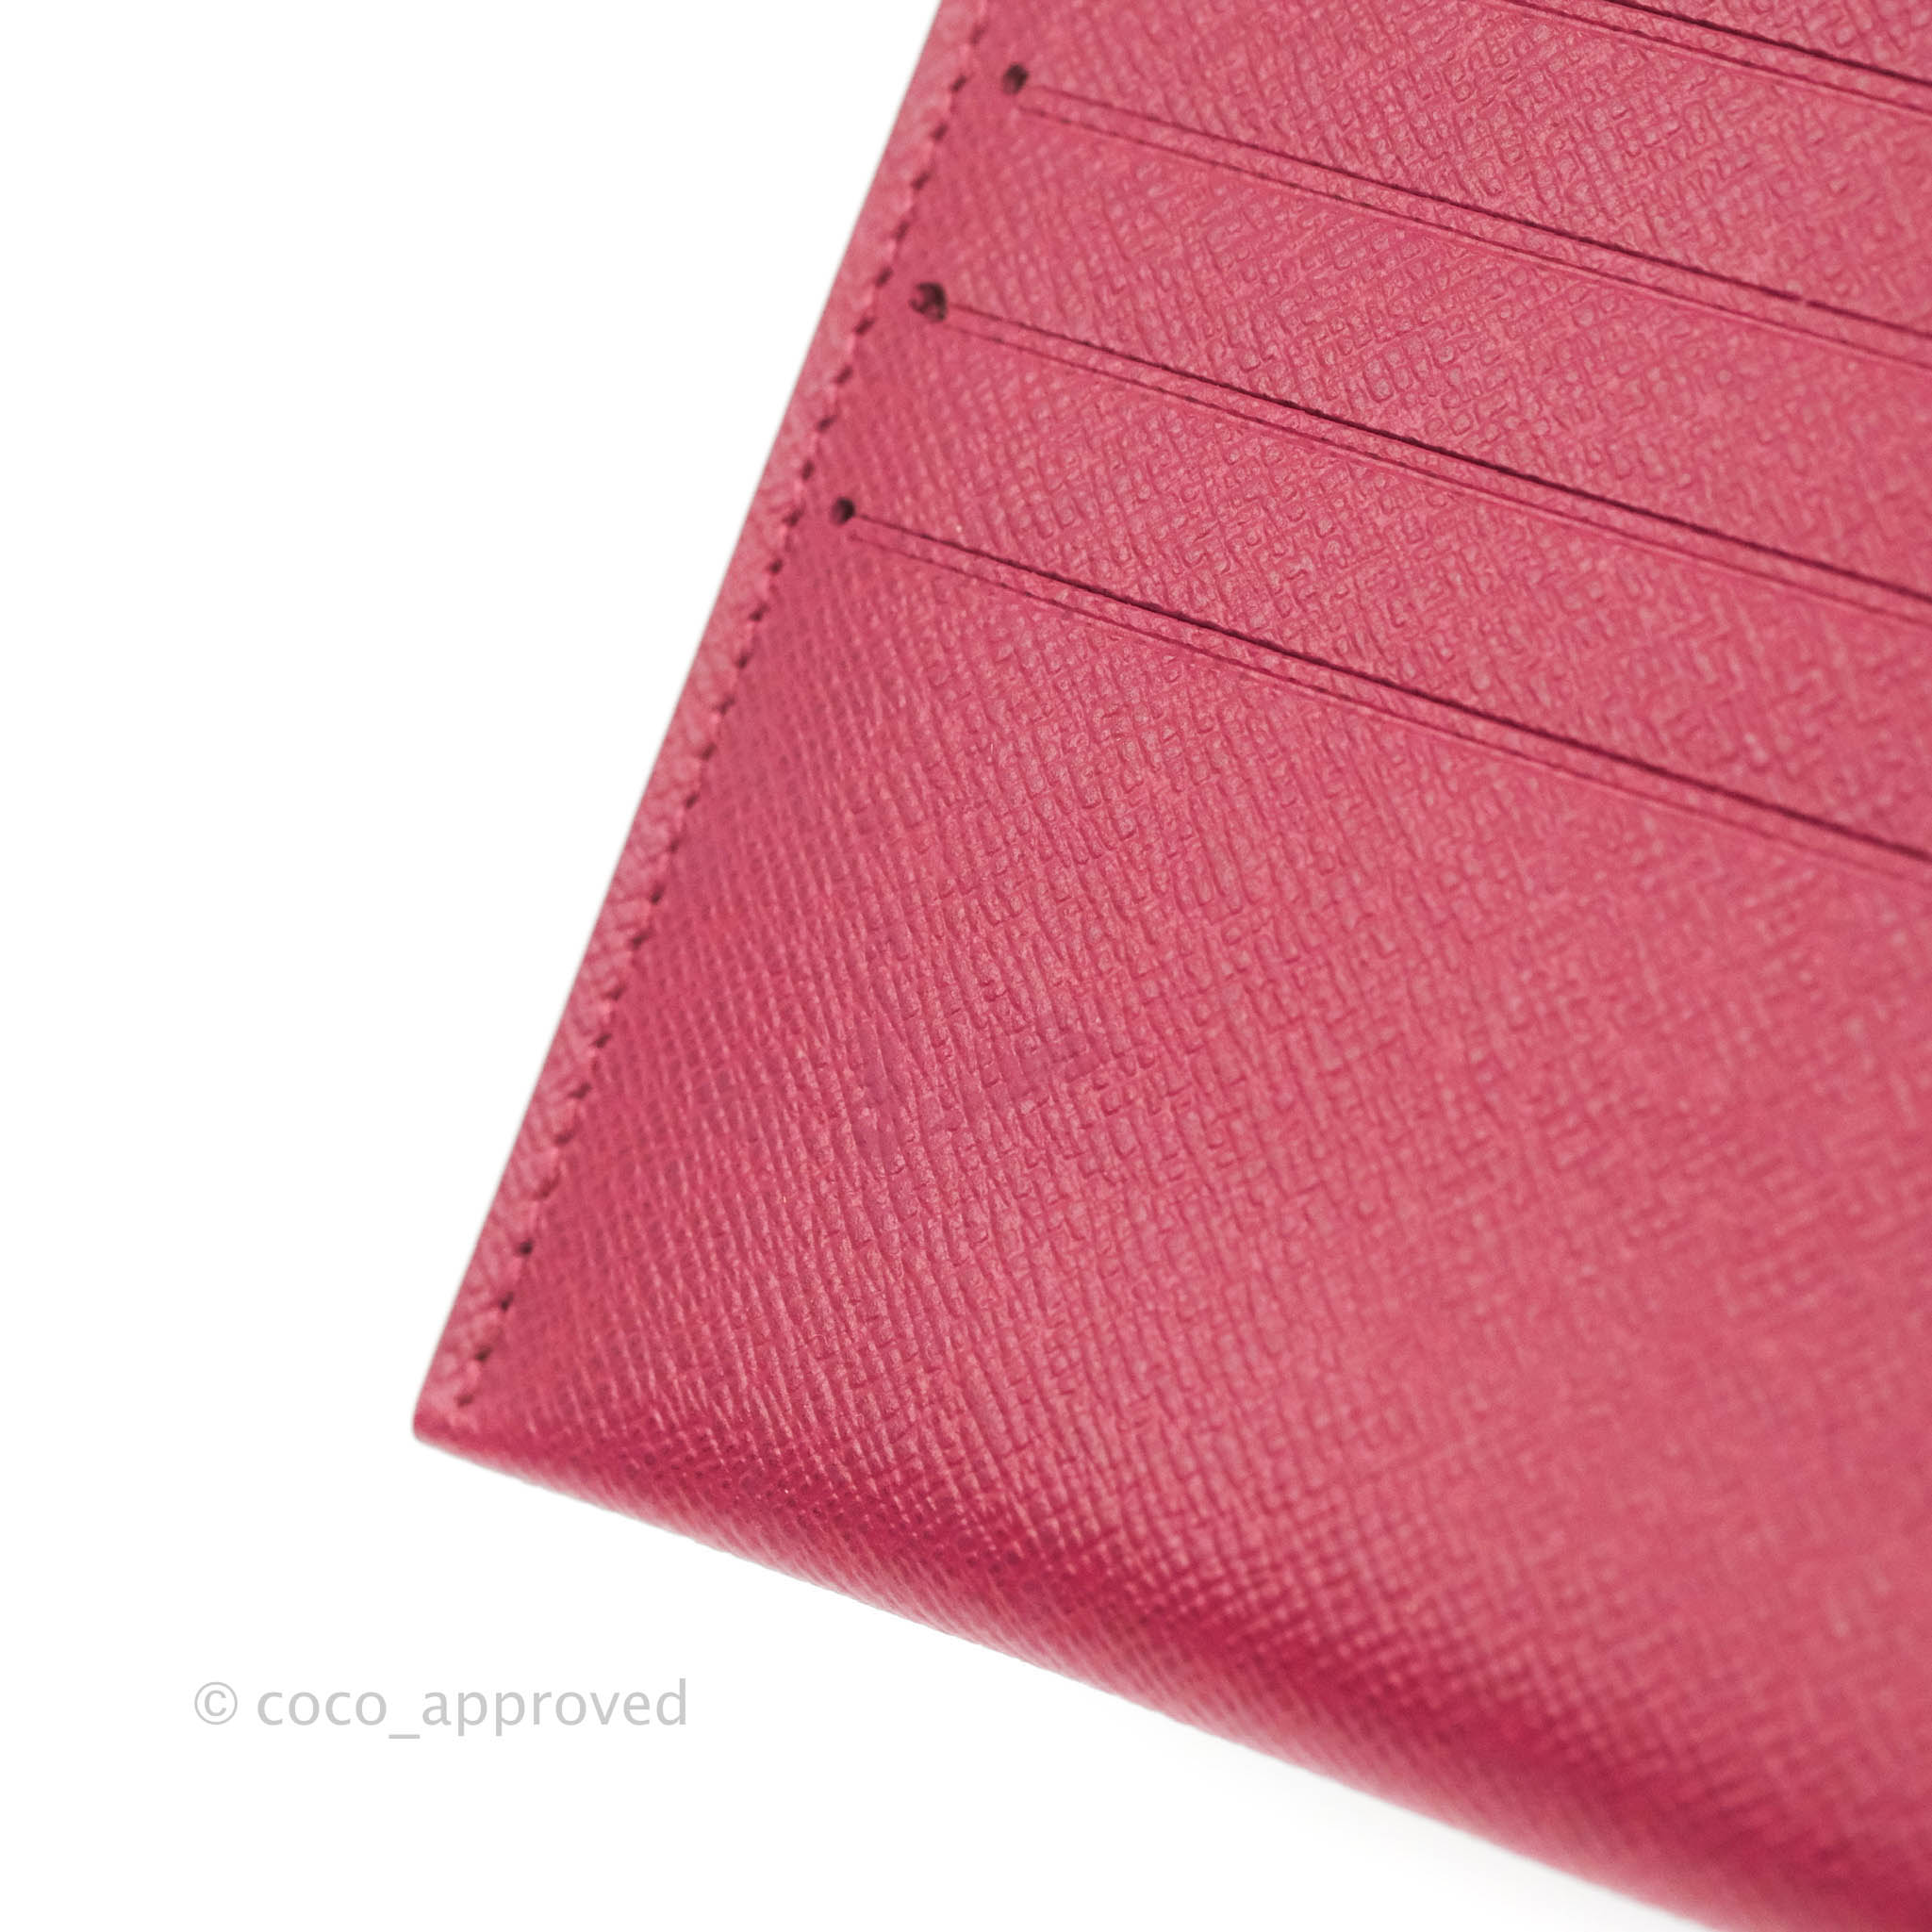 Louis Vuitton Pochette Felicie Pink Blue 52435 Handbag w/chain strap Dressy  NYE